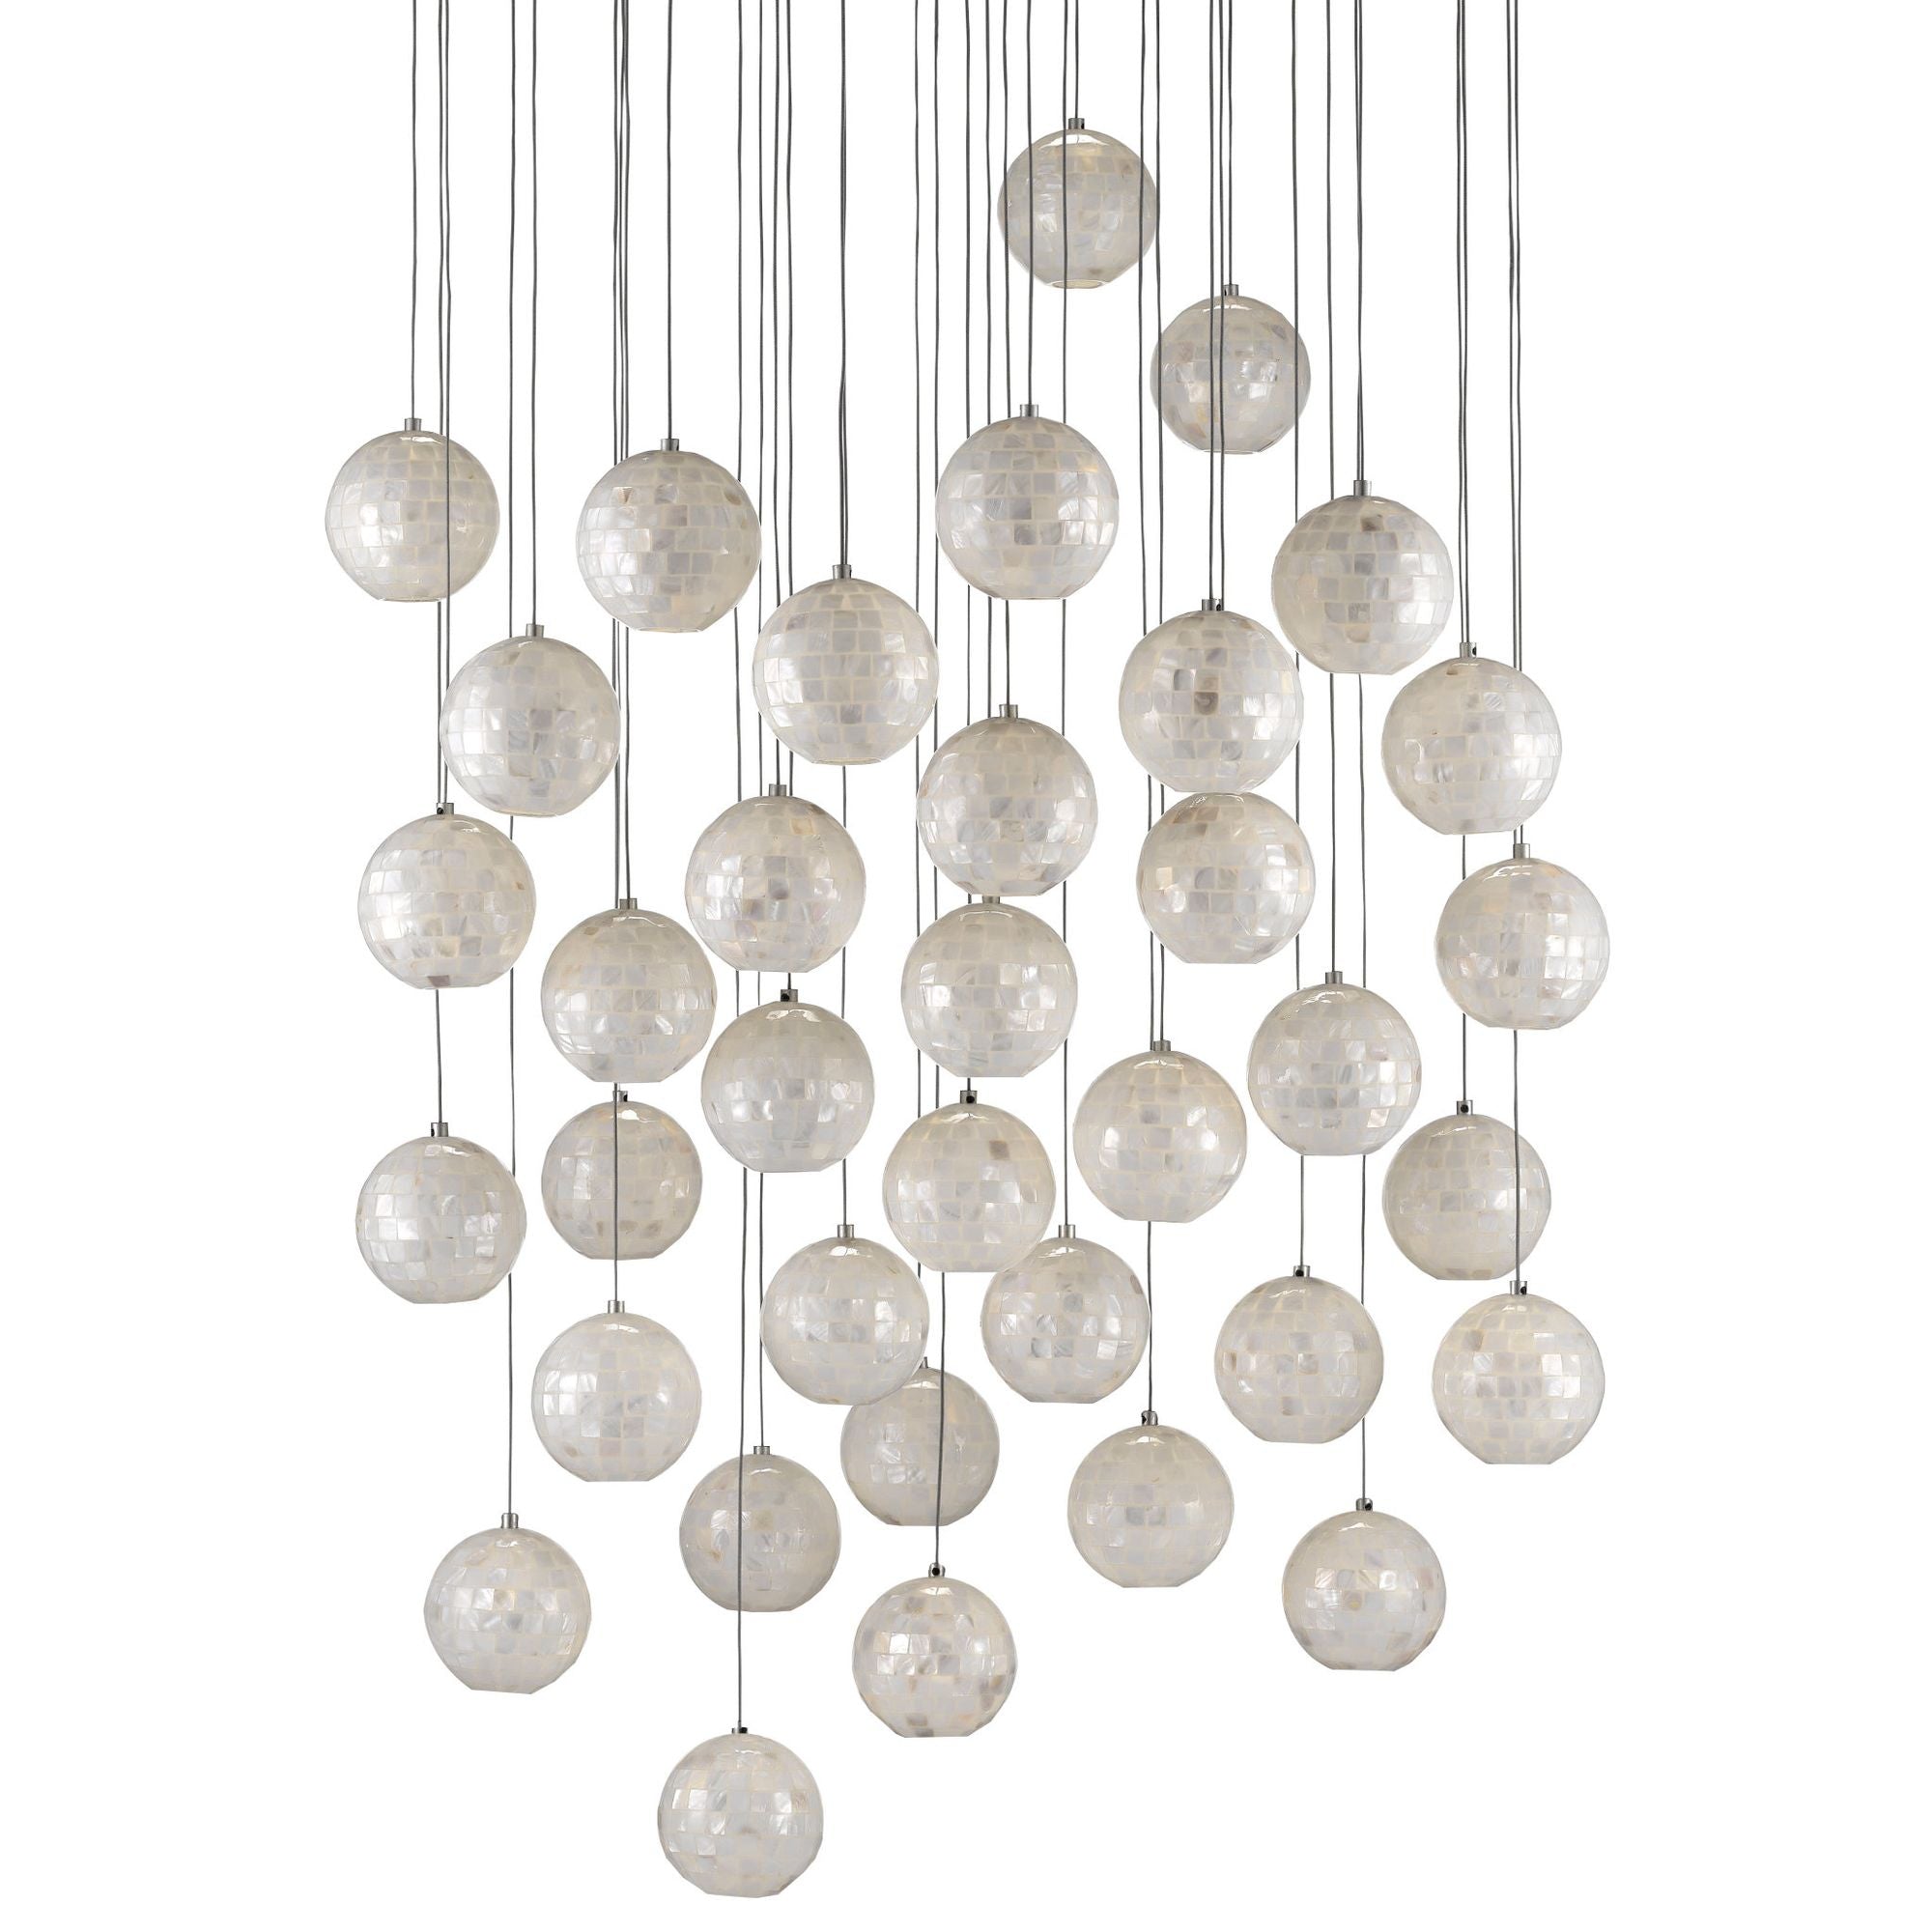 Finhorn 36-Light Round Multi-Drop Pendant - Painted Silver/Pearl